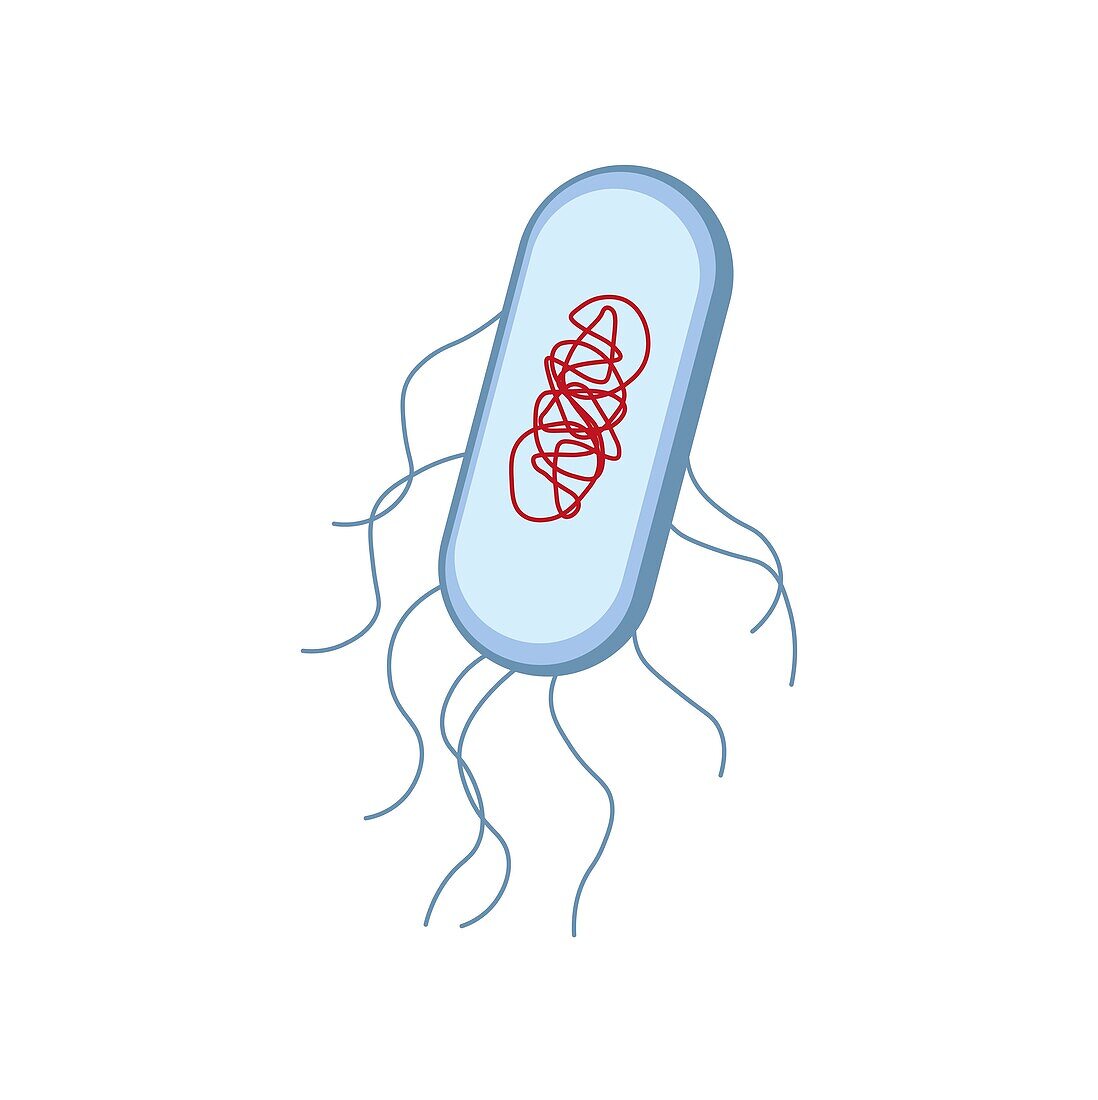 Escherichia coli bacterium, illustration